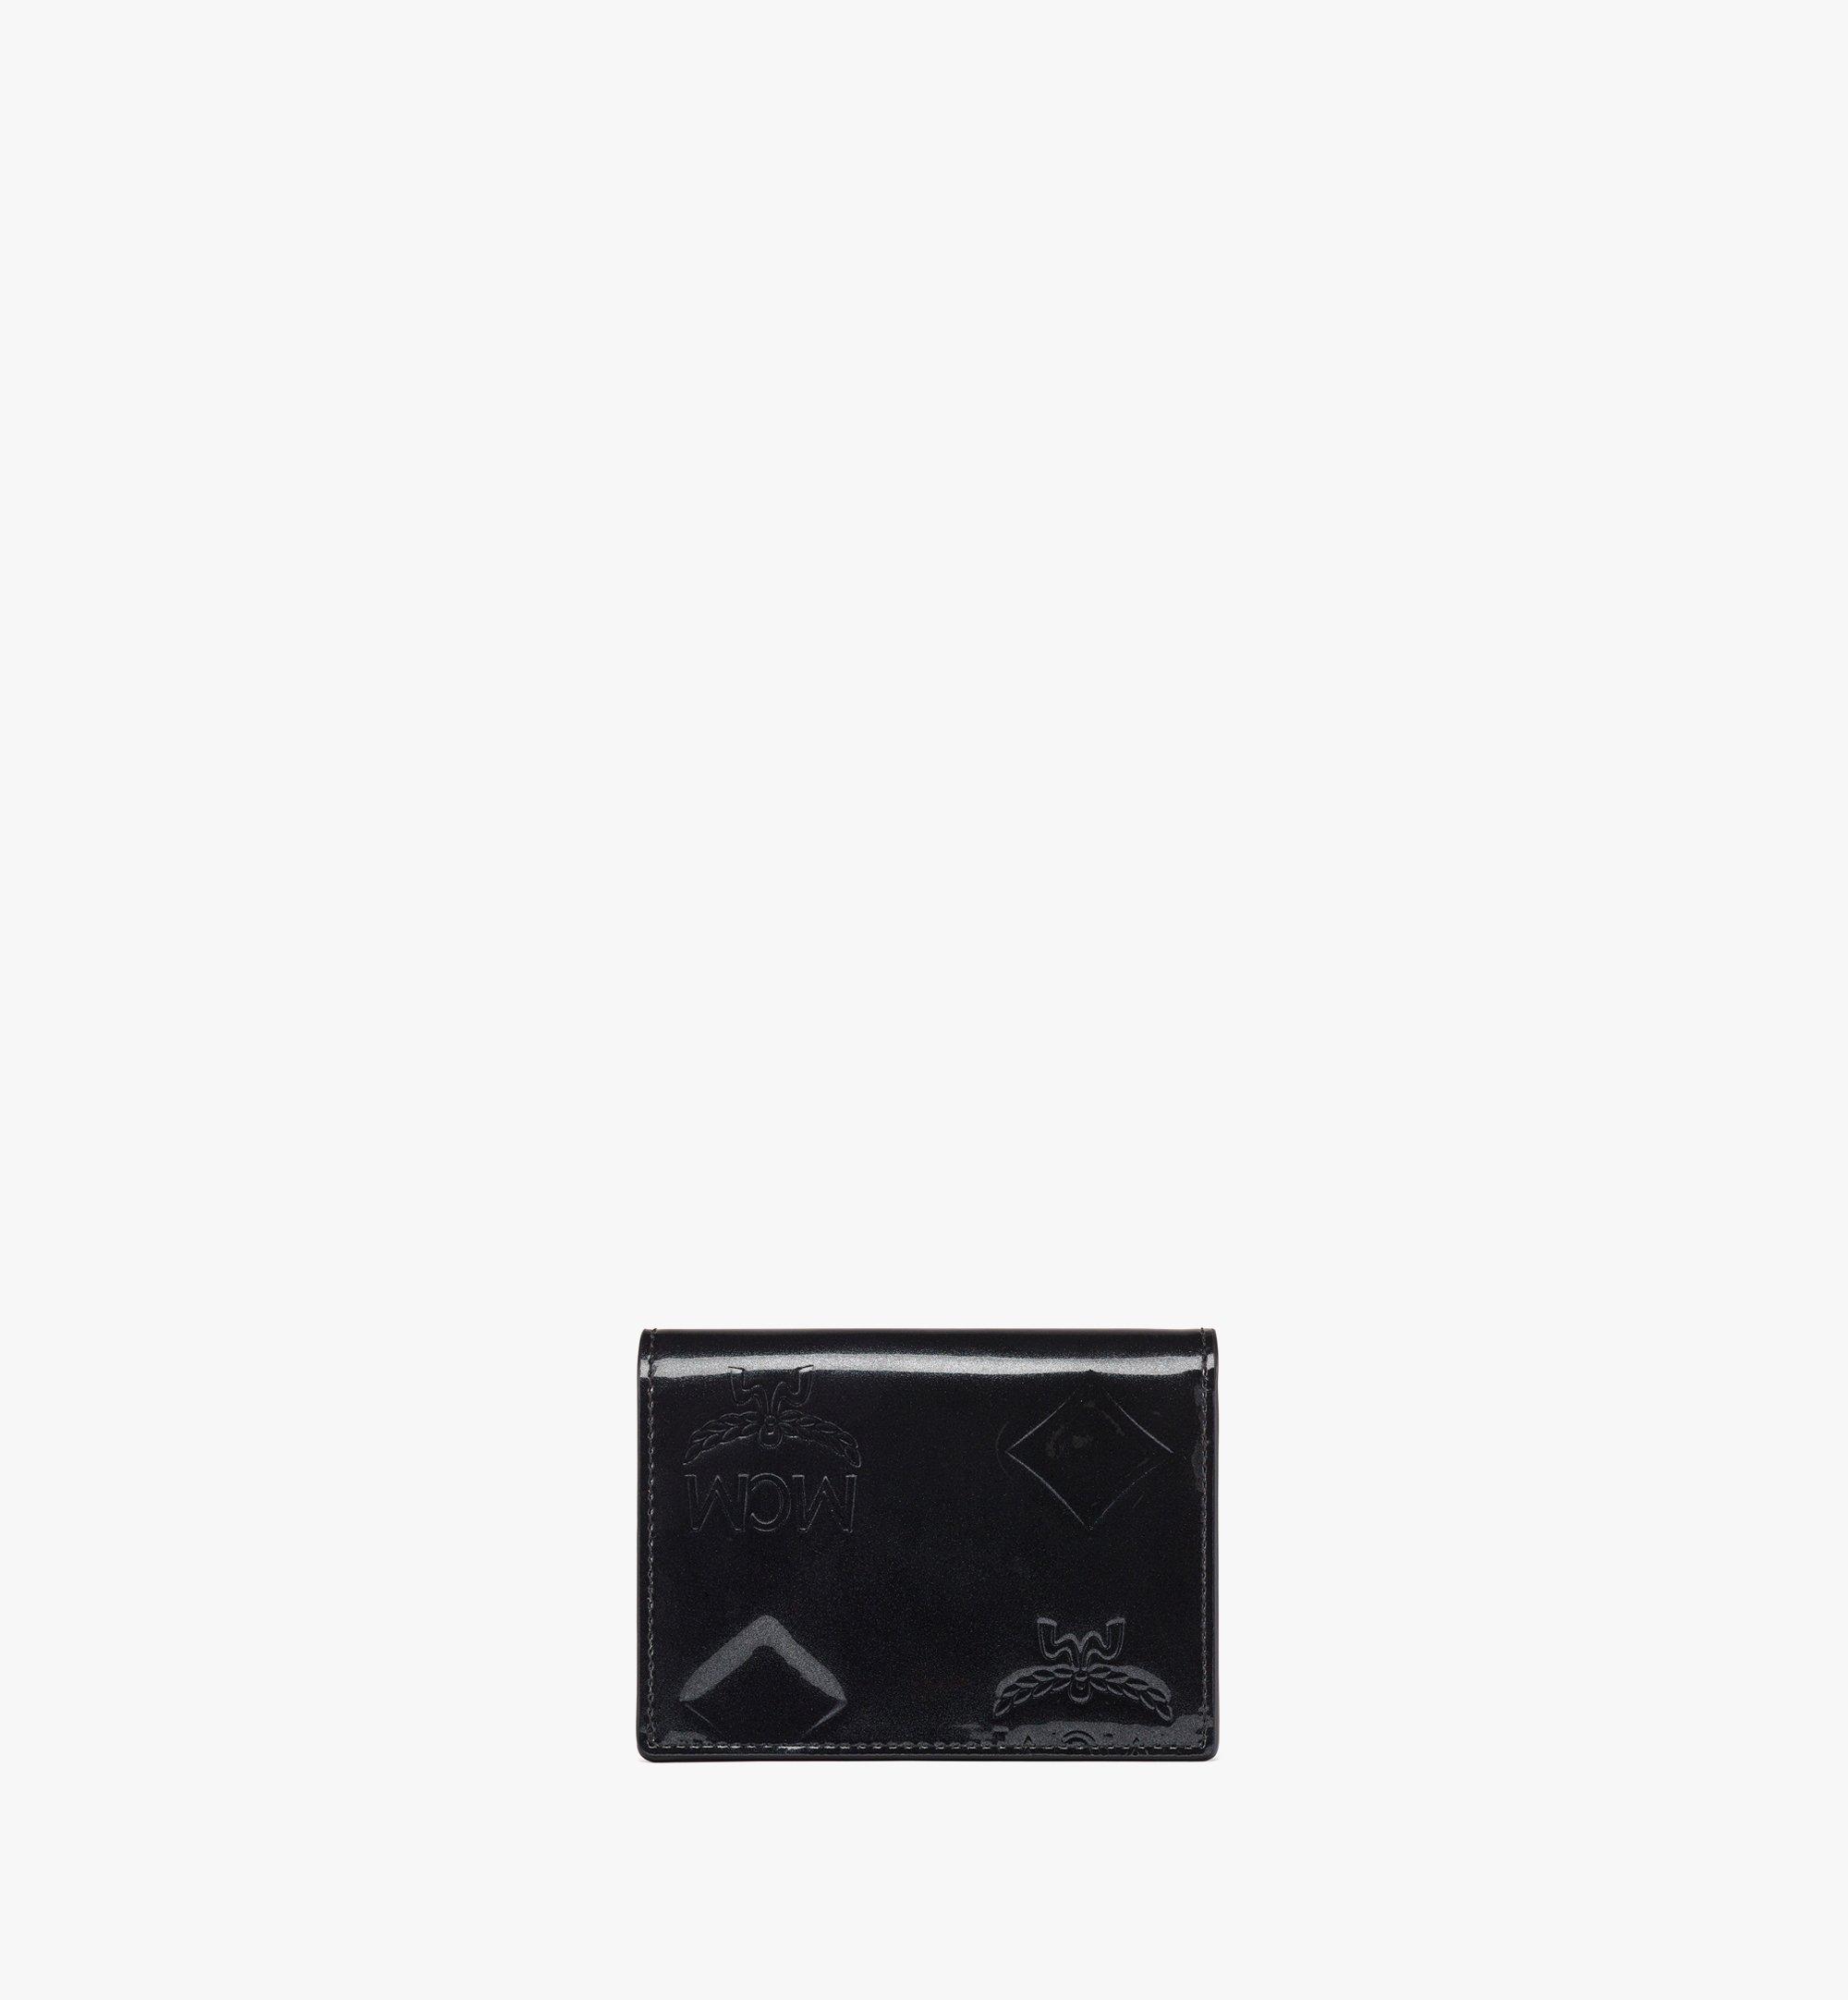 MCM Aren Bifold Snap Wallet in Maxi Patent Leather Black MYSDATA02BK001 Alternate View 2